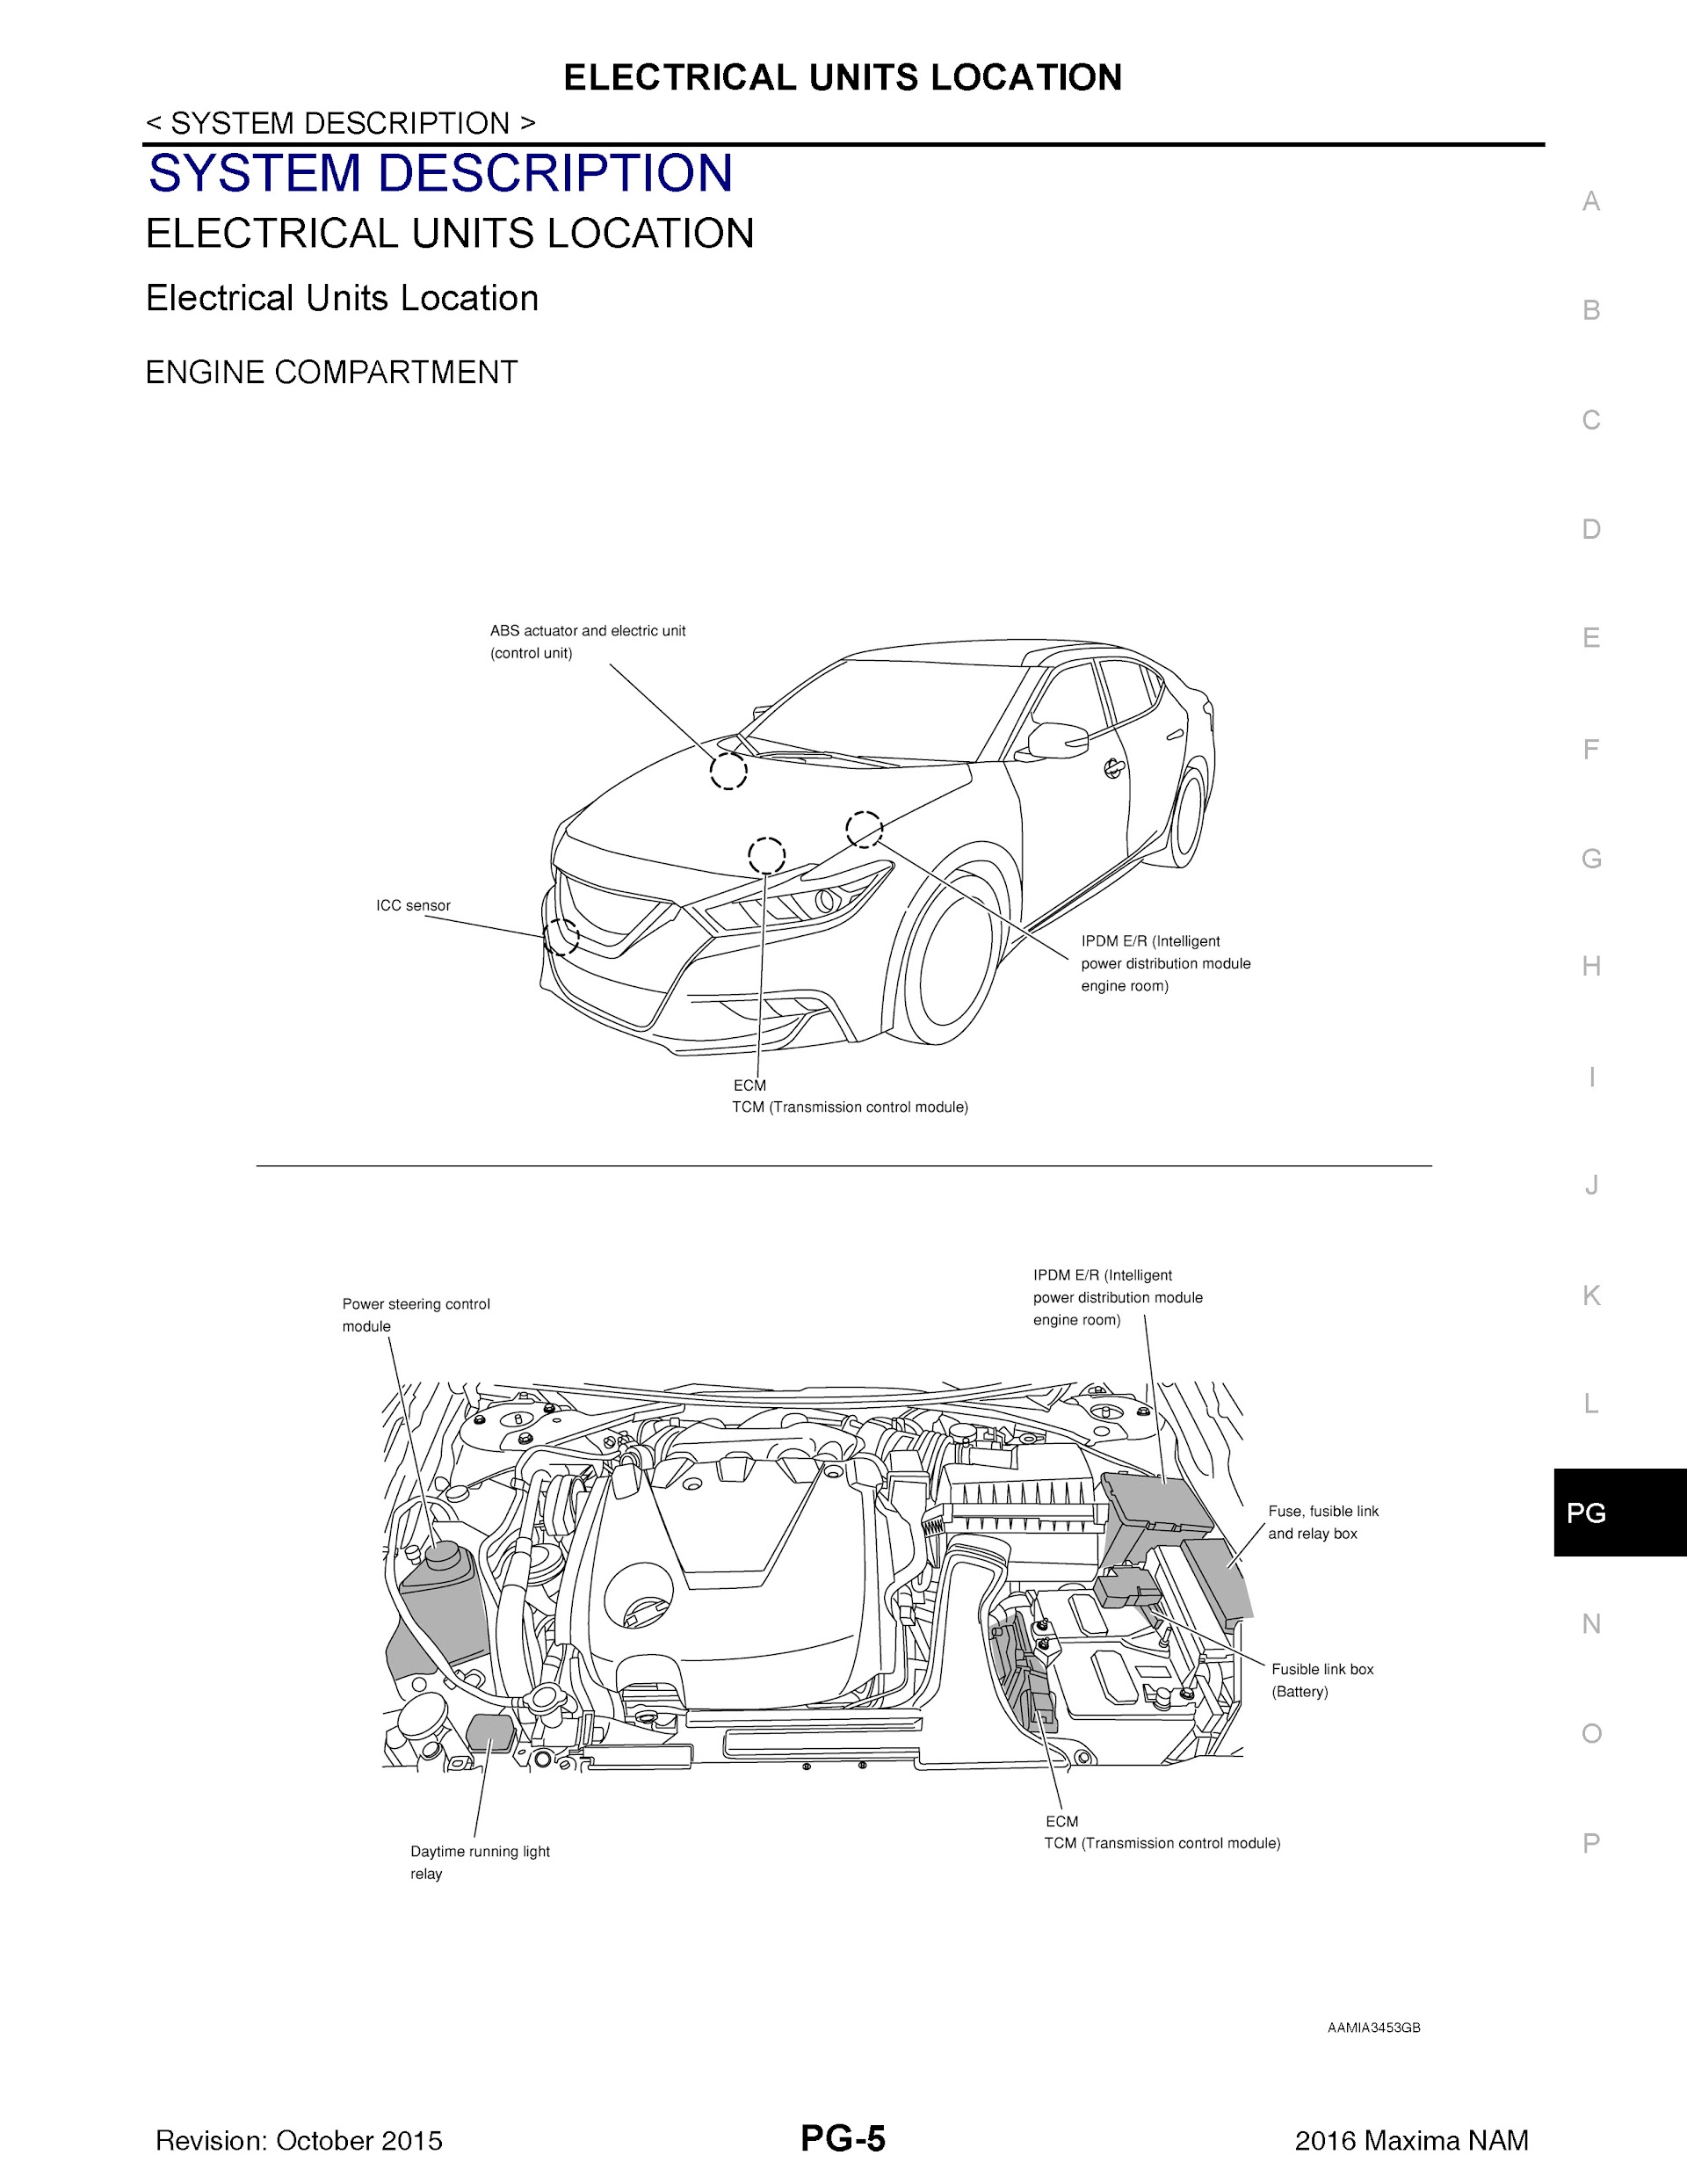 2016 Nissan Maxima Repair Manual, Electrical Unit Location